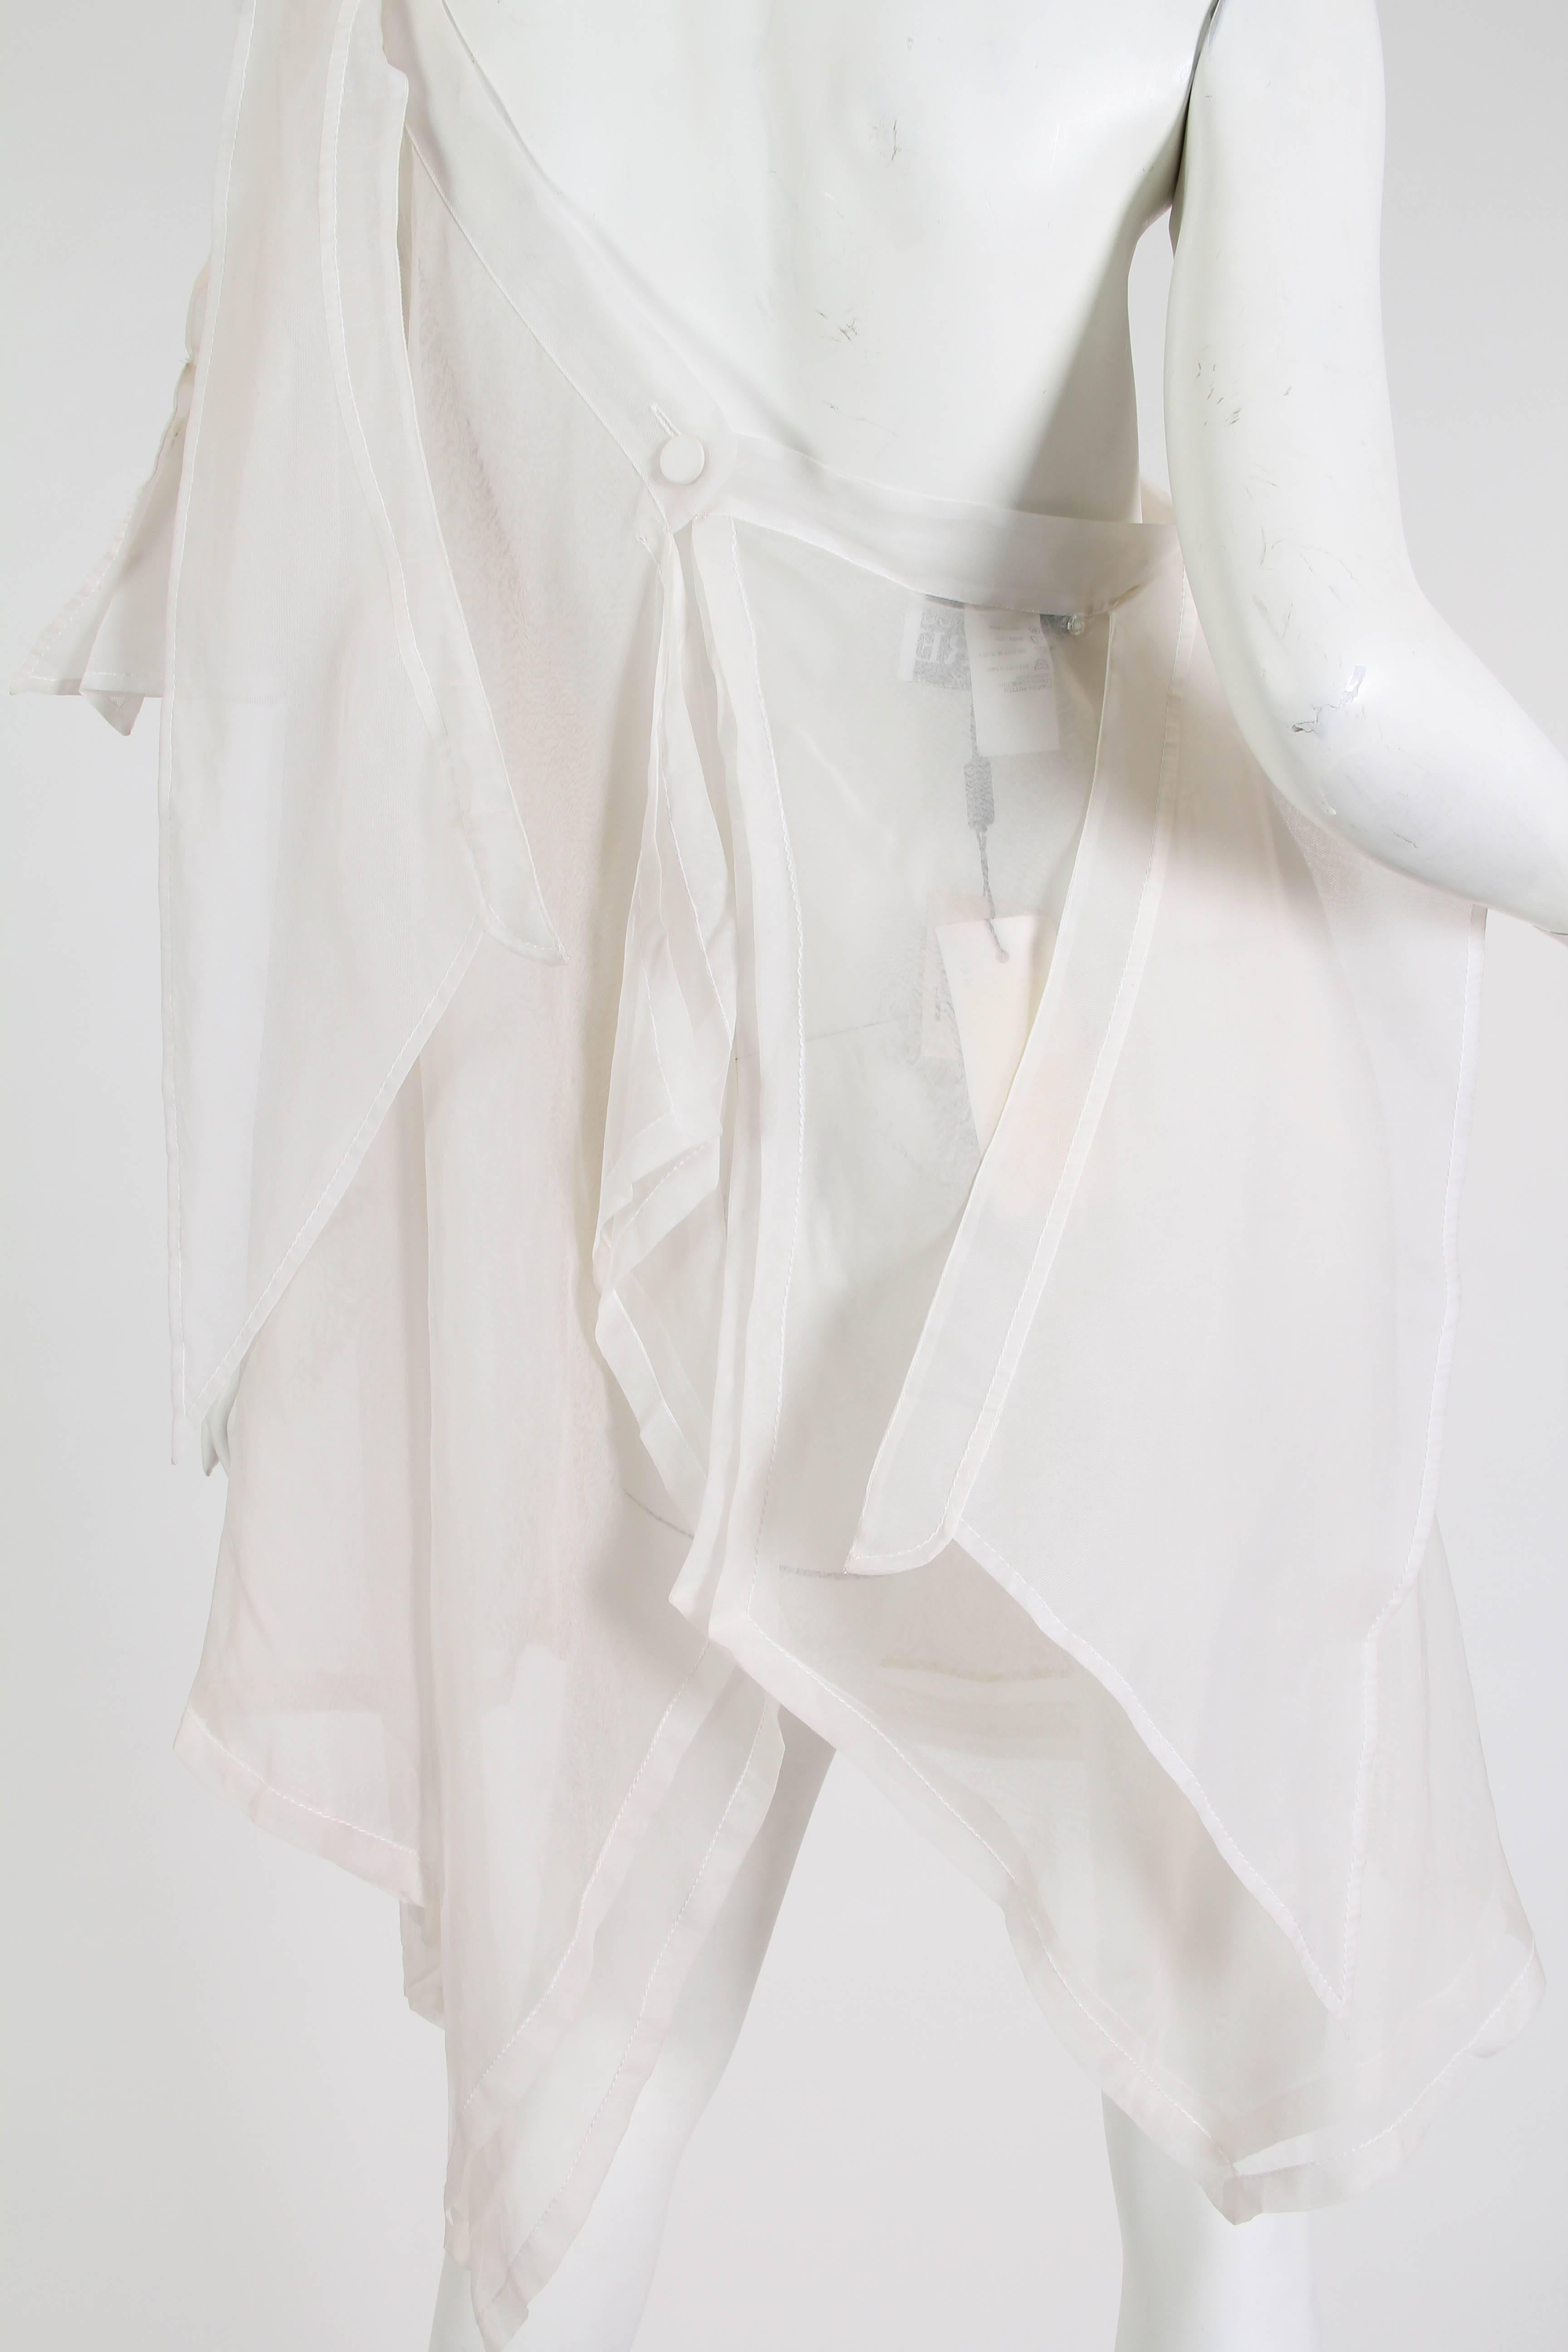 Gianfranco Ferre Asymmetrical Organza Tunic Dress 2